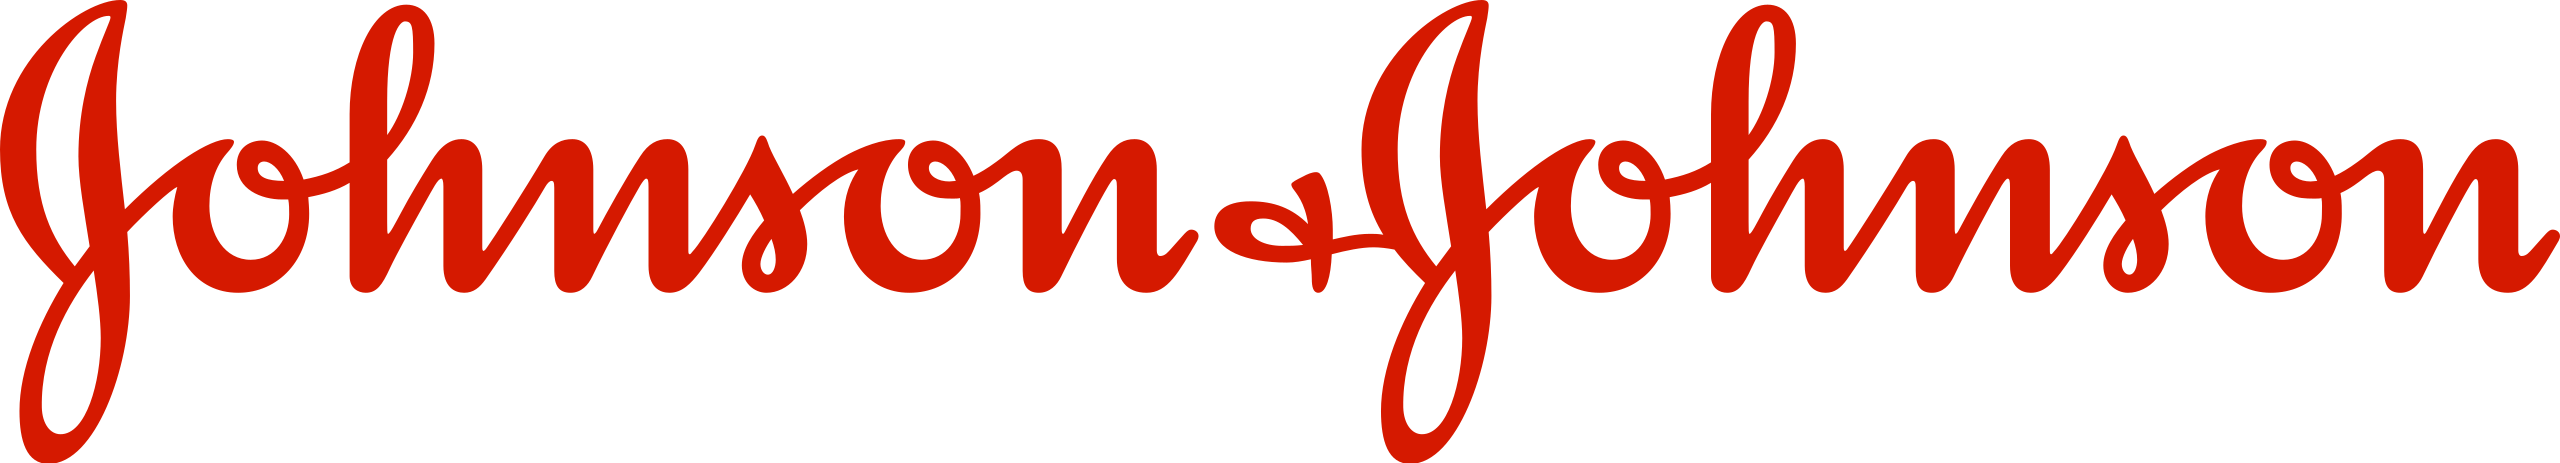 Johnson & Johnson (Belgium) logo